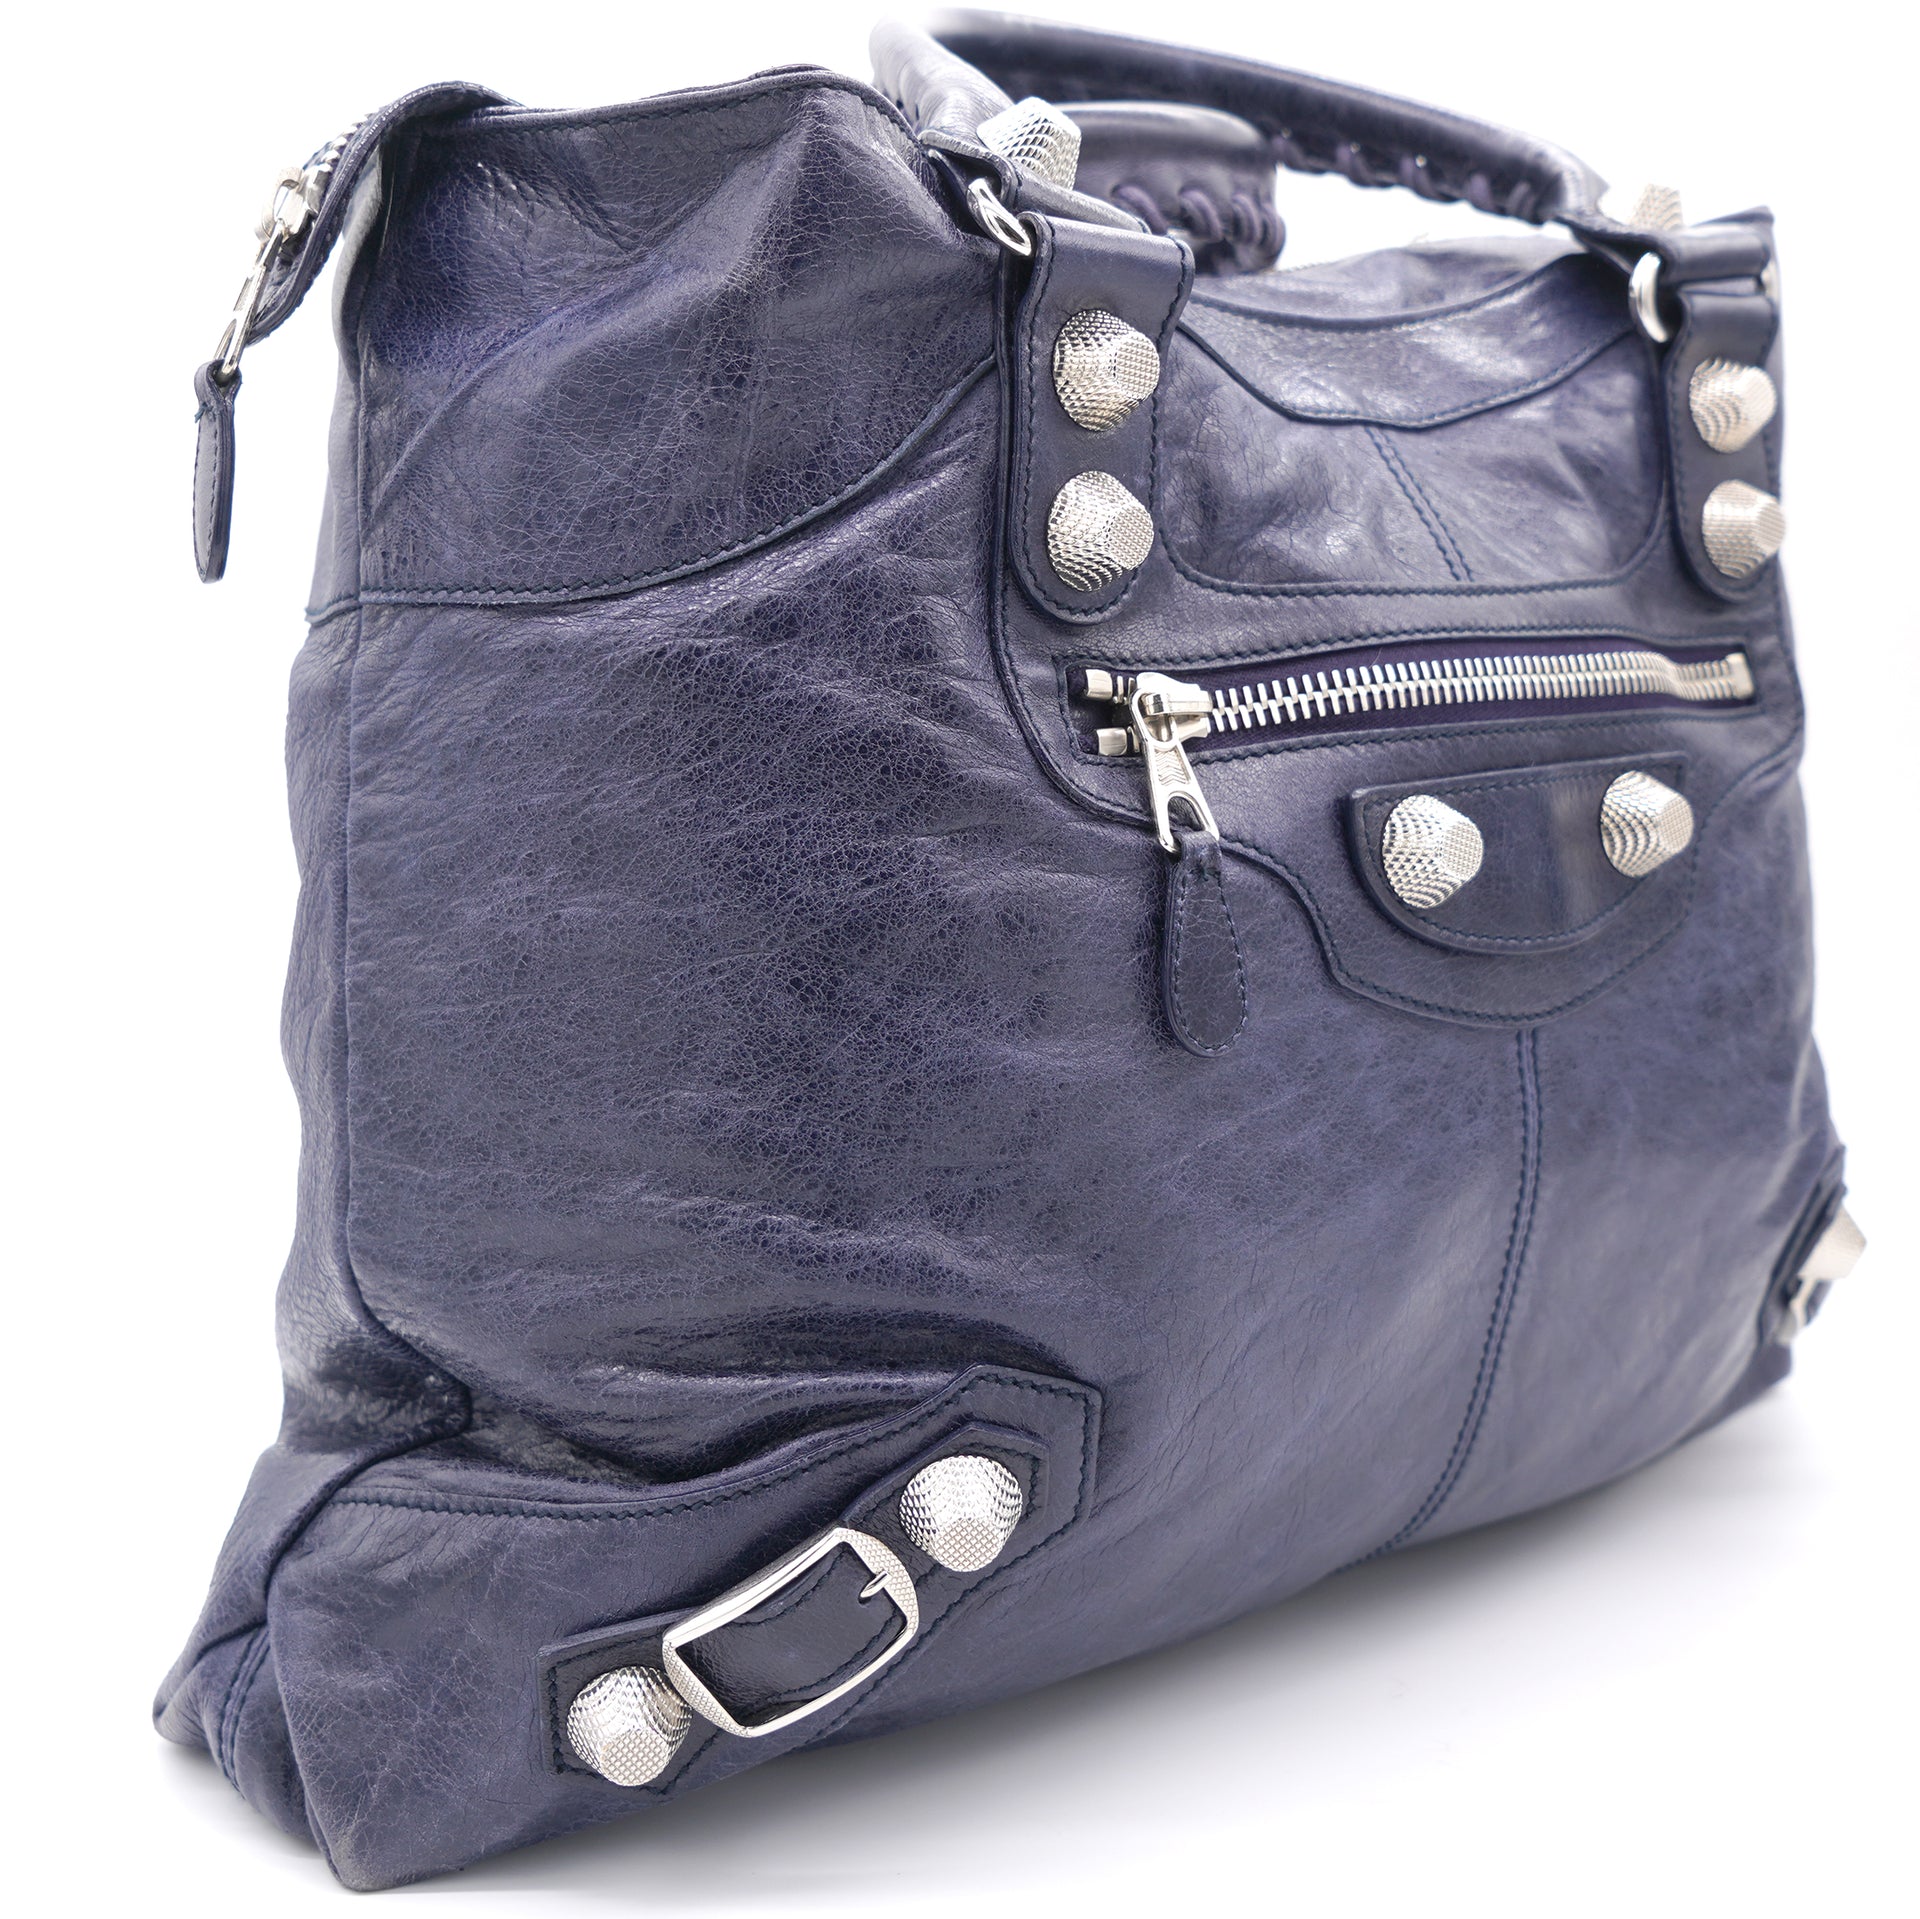 City leather handbag Balenciaga Navy in Leather  31930798